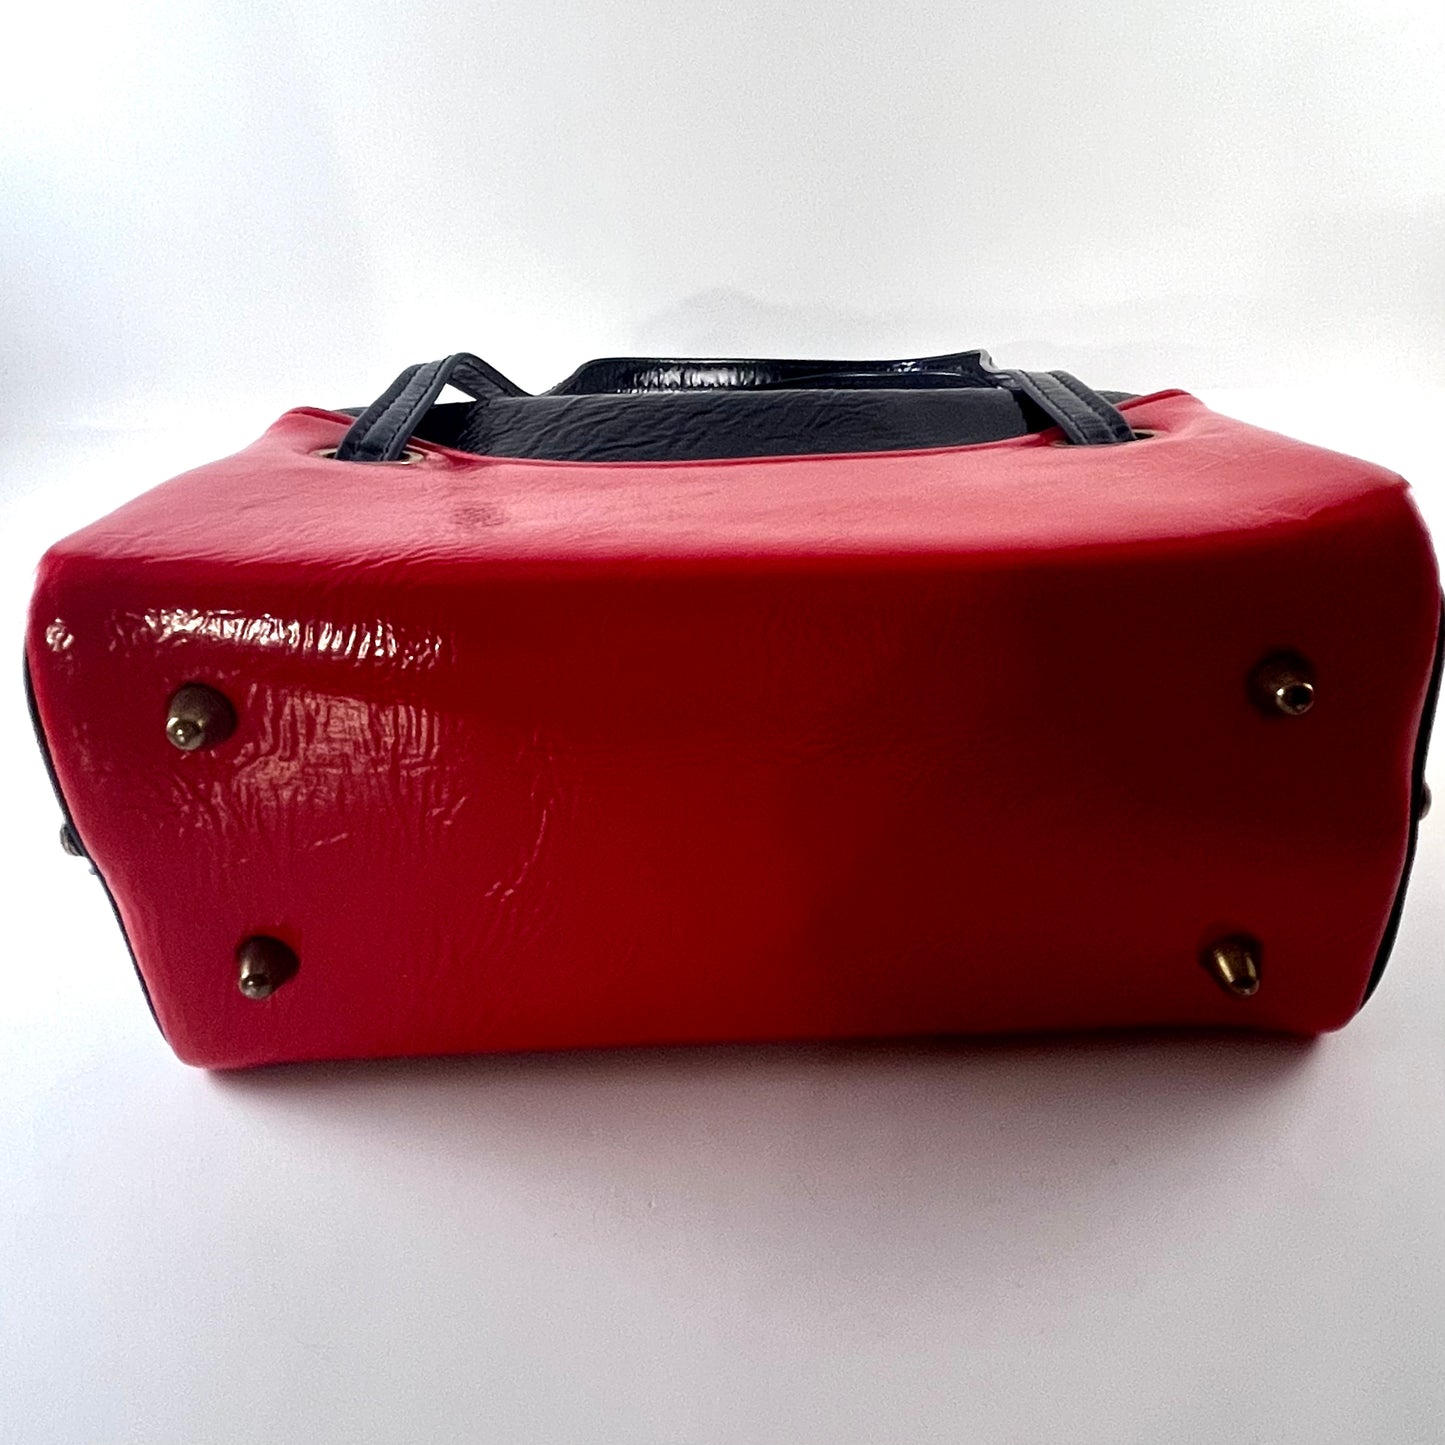 1960s Navy & Red Patent Leather Box Handbag